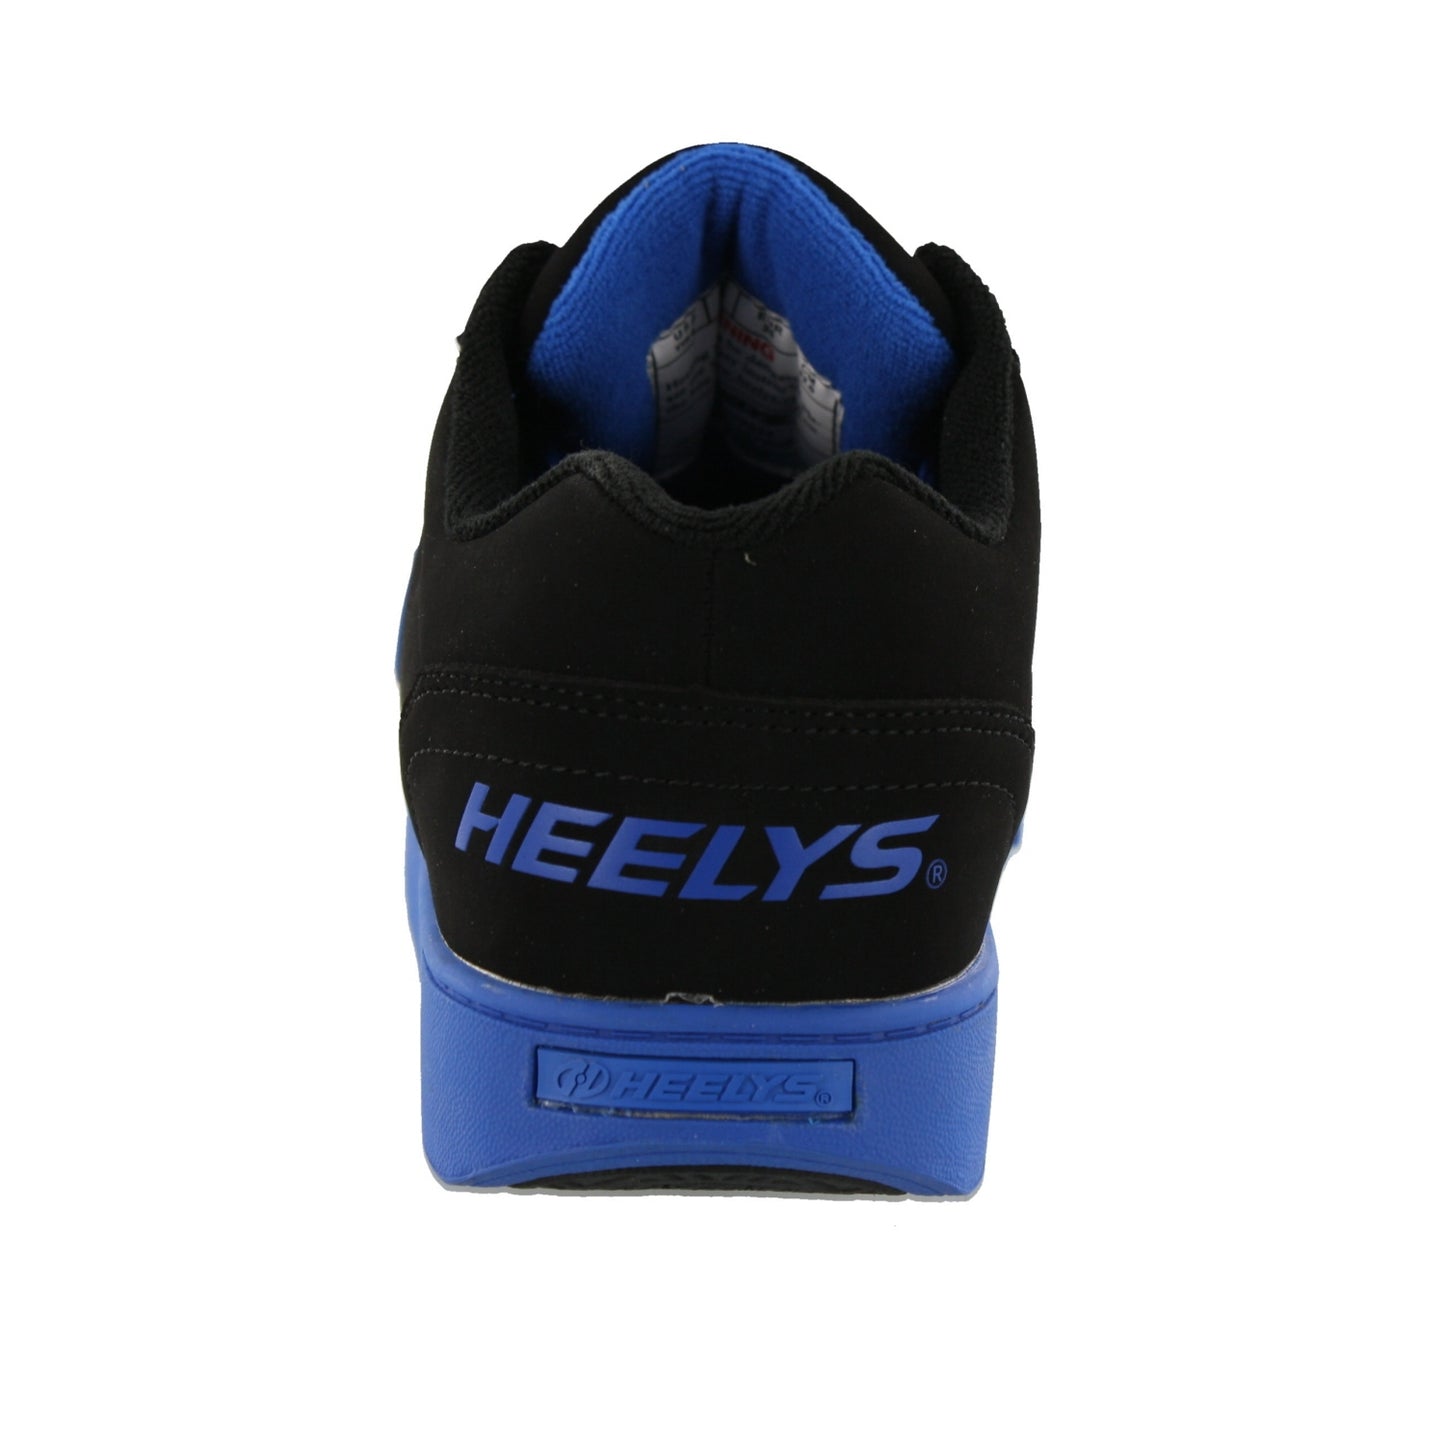 
                  
                    Heelys Kids Skateboard Wheeled Shoes With Wheels Straight Up
                  
                